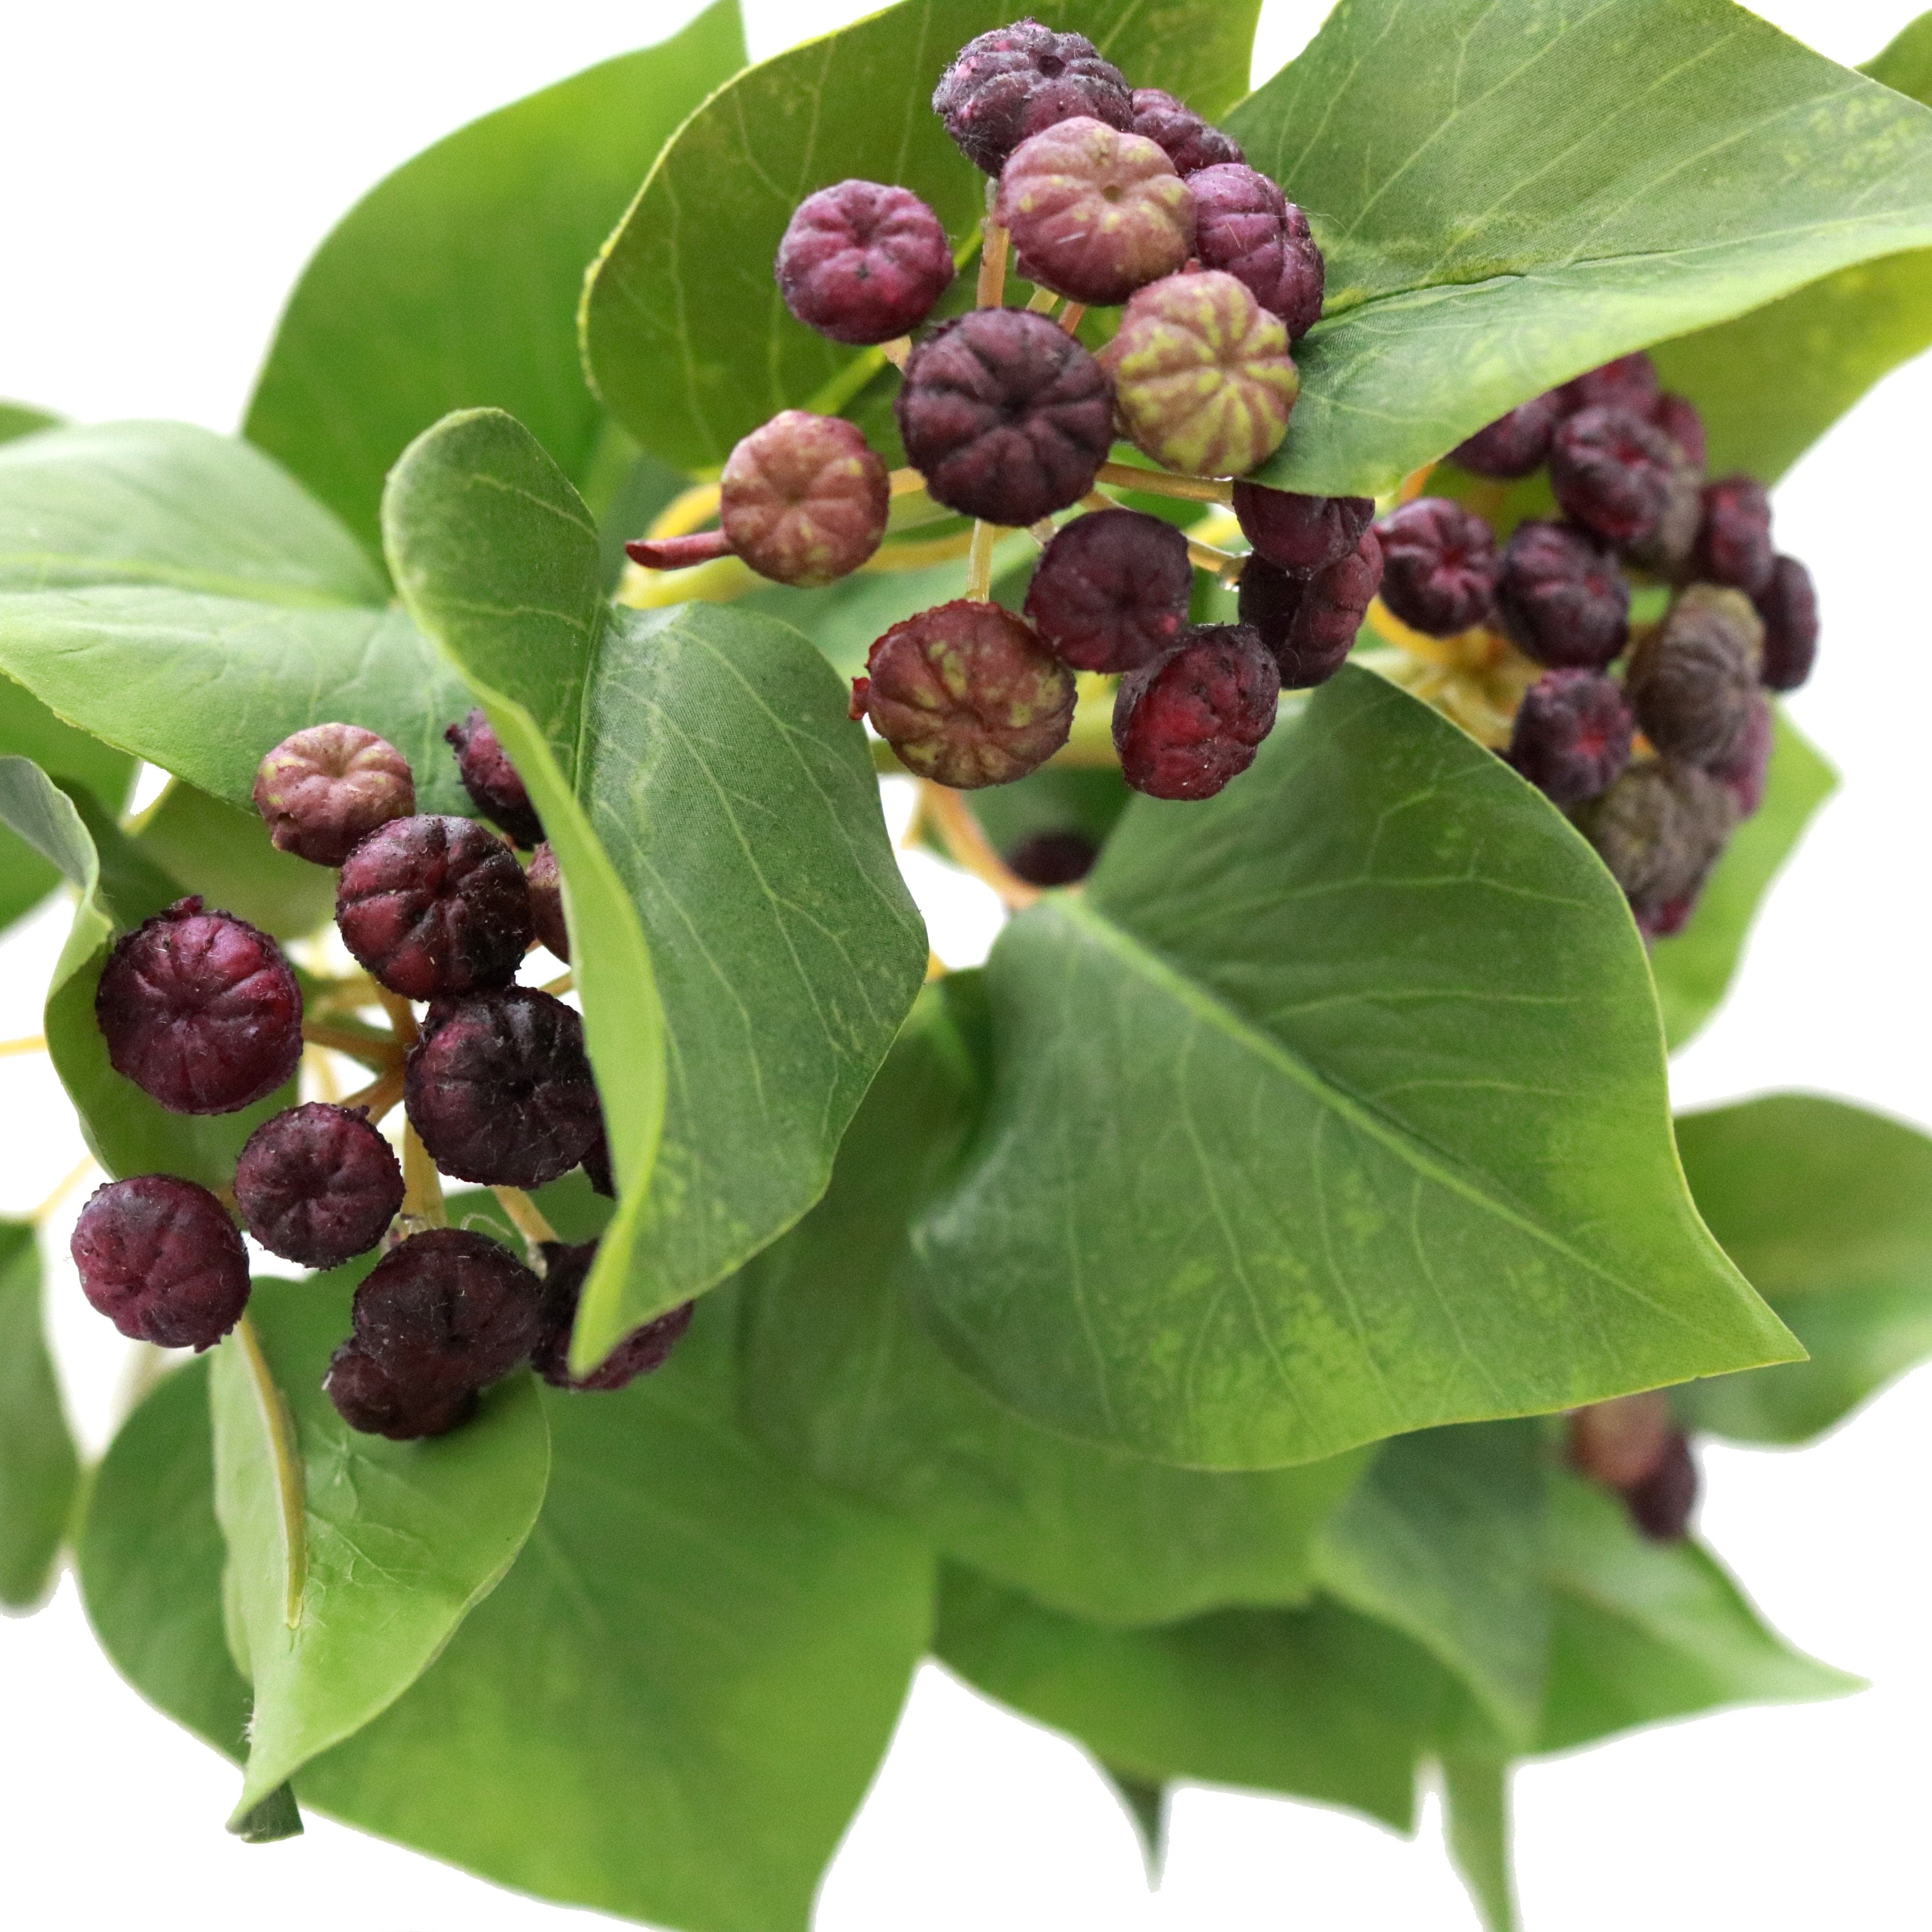 artafical silk ivy with berries